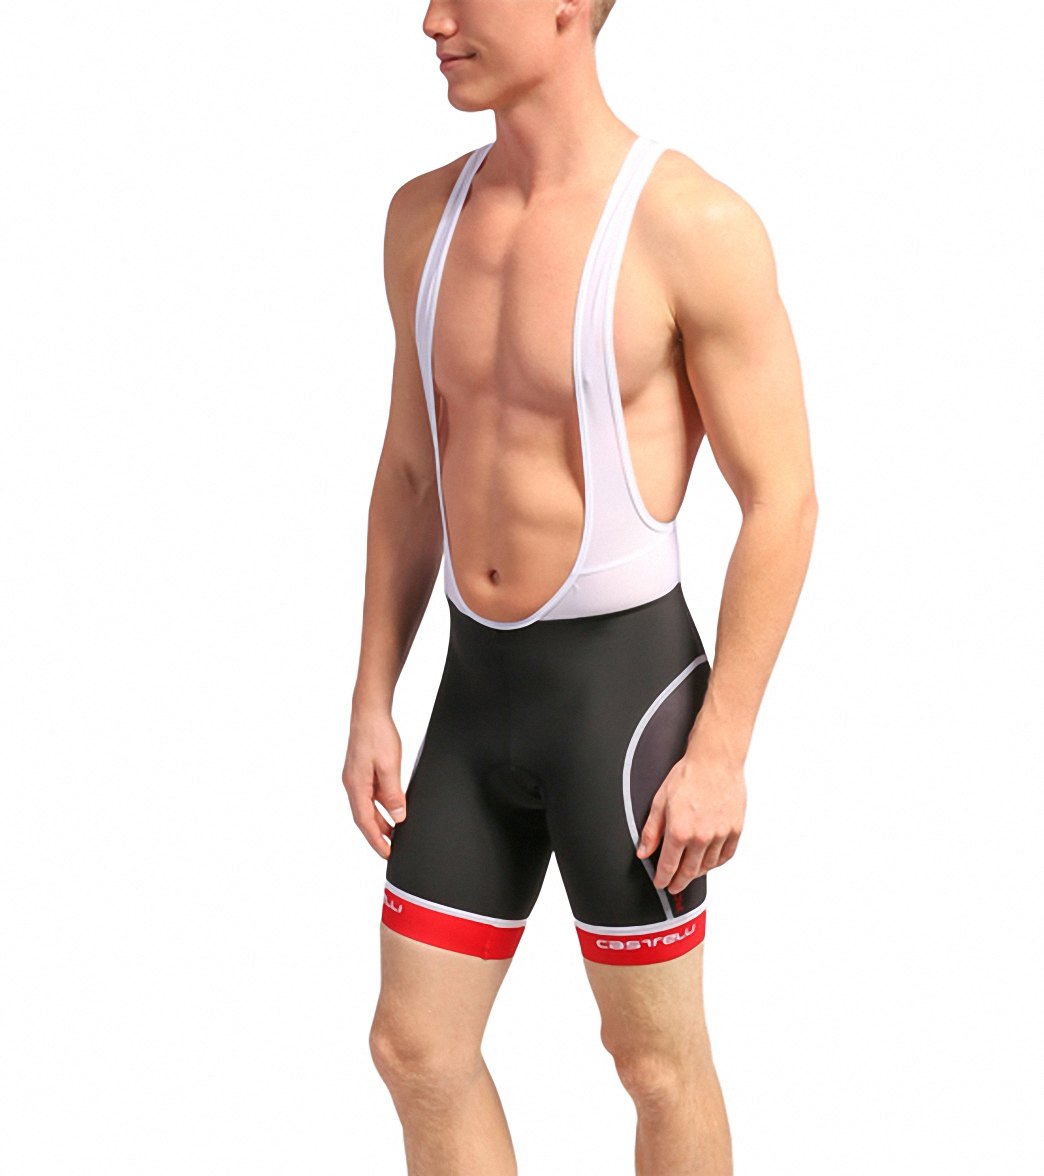 Castelli Men's Free Tri Bib Shorts at SwimOutlet.com - Free Shipping